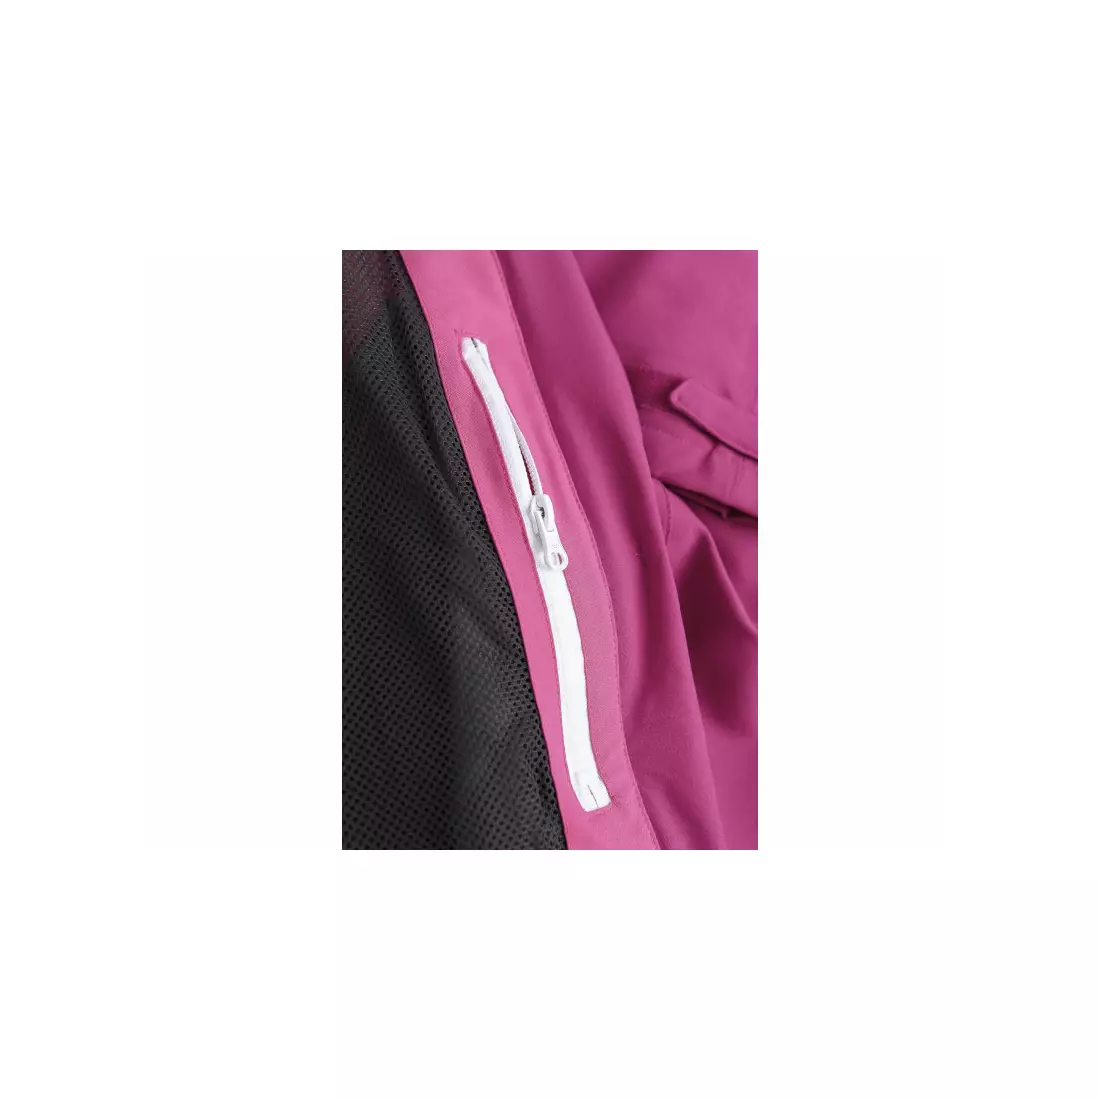 DARE2B women's rain jacket PAVILLION DWW102-6N5, color: pink